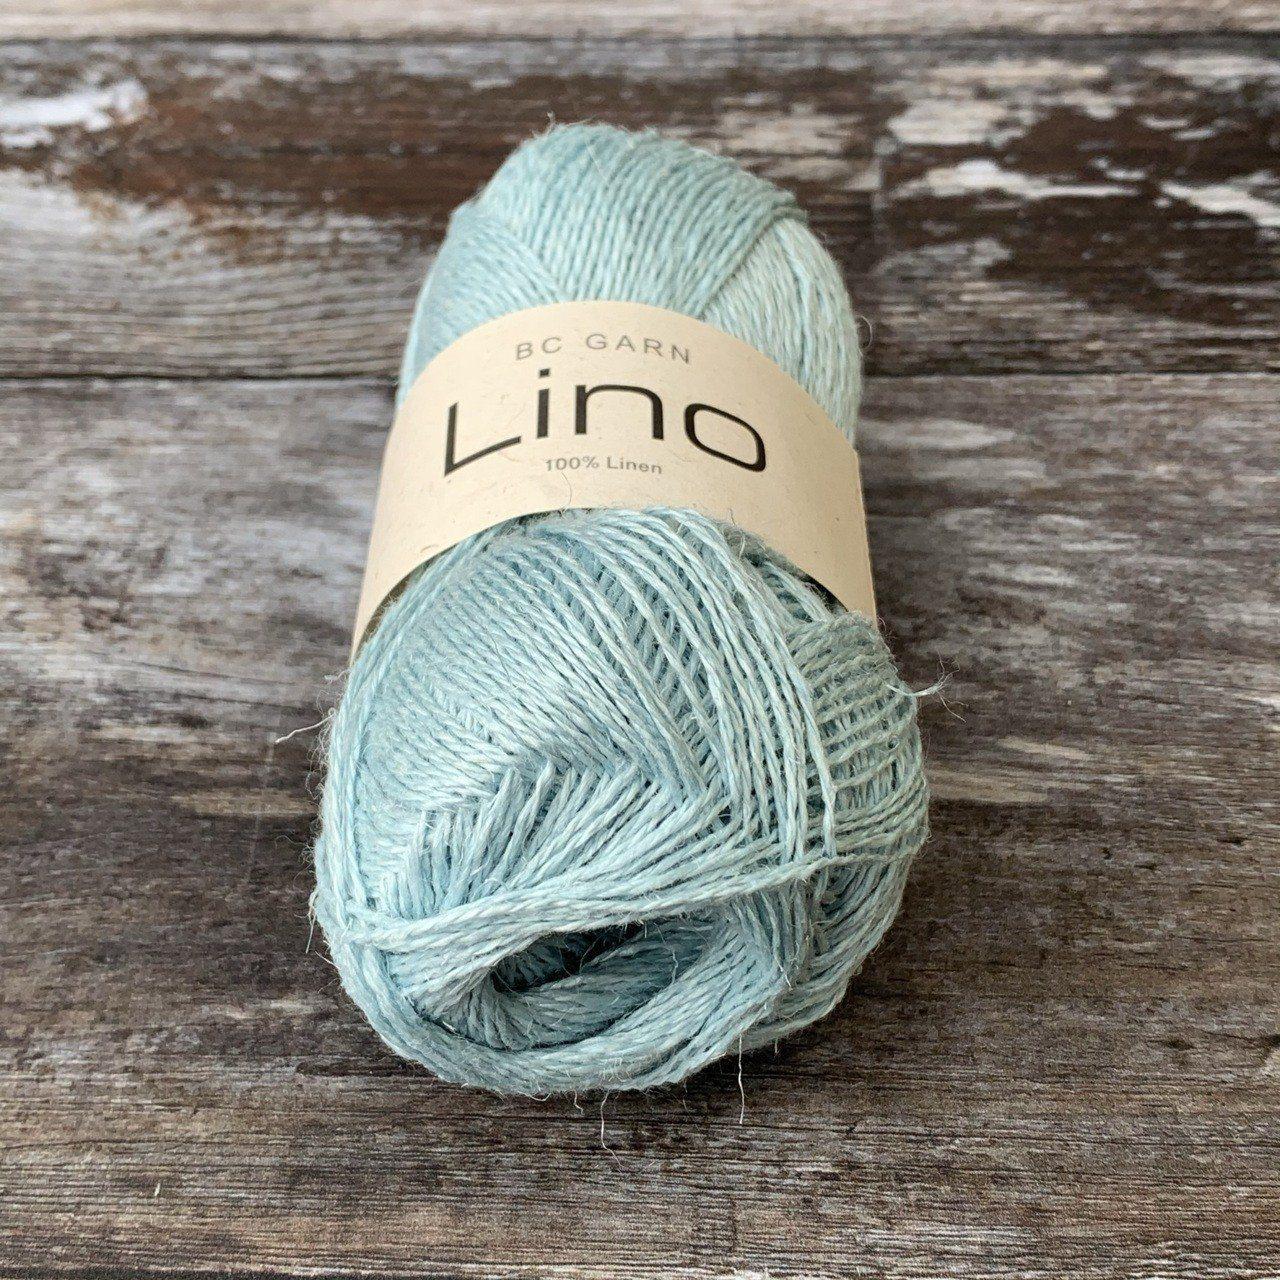 BC Garn BC Garn Lino - Sky Blue (48) - 4ply Knitting Yarn